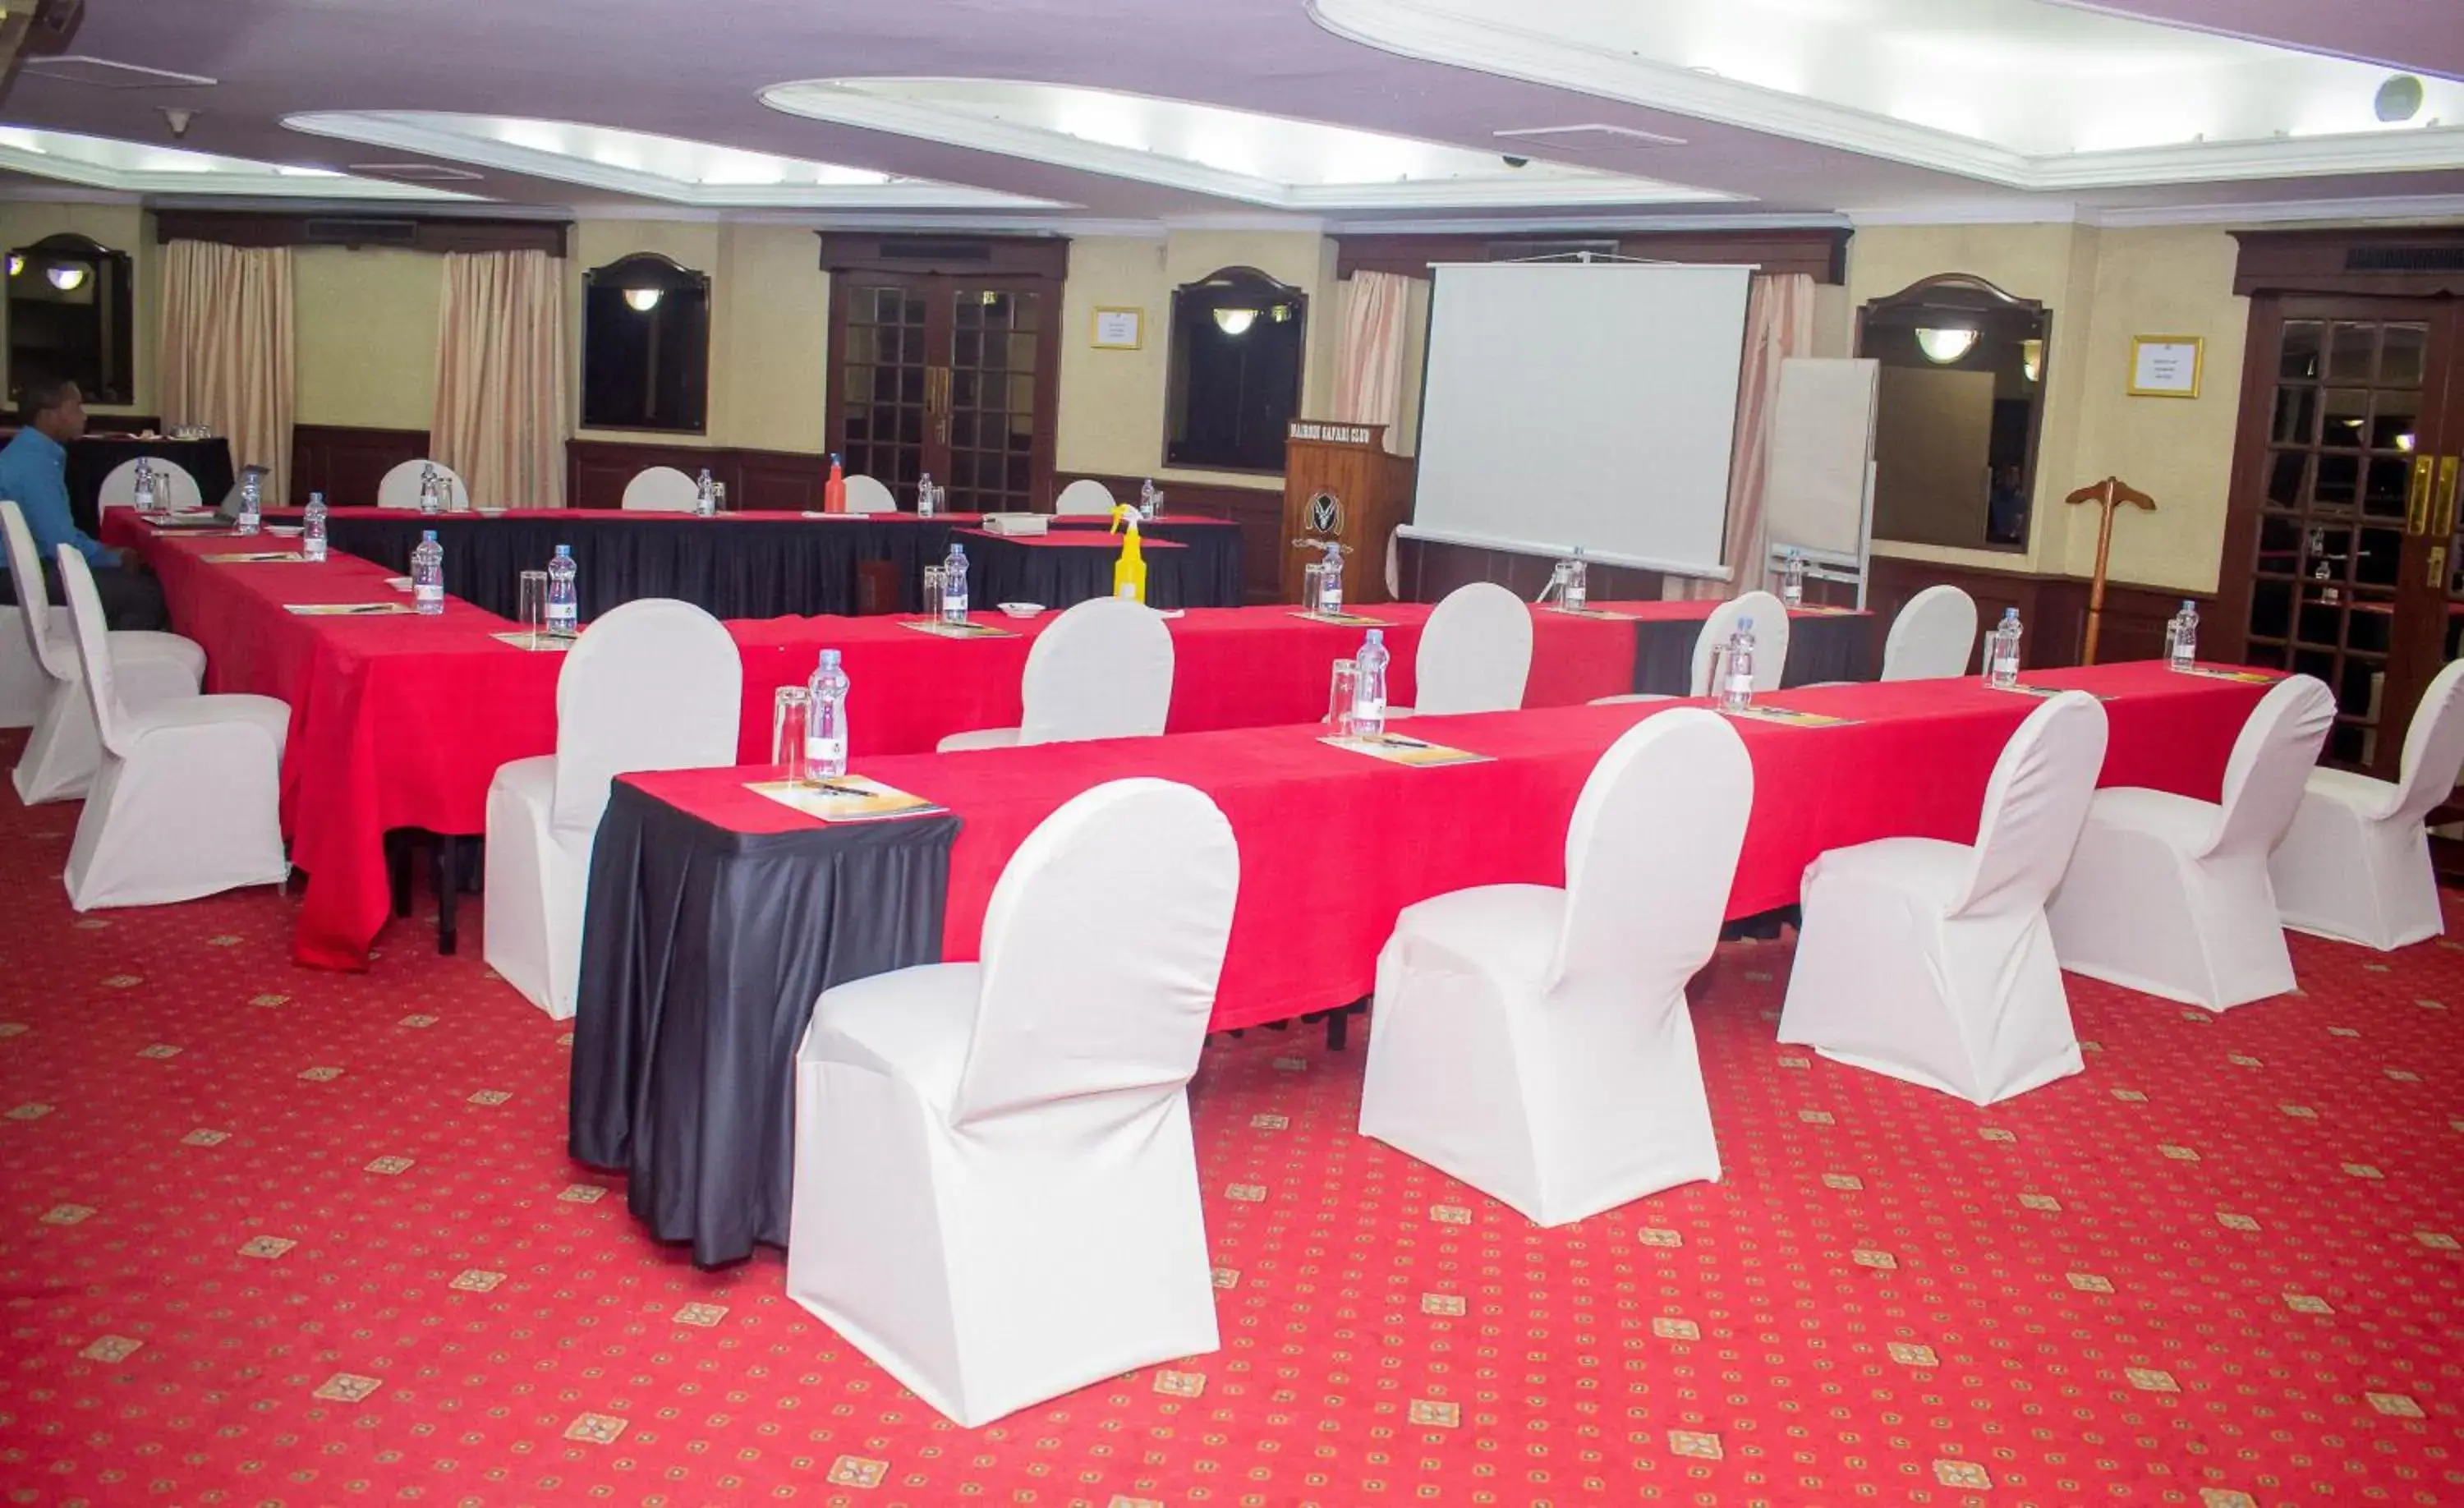 Banquet/Function facilities, Banquet Facilities in Nairobi Safari Club